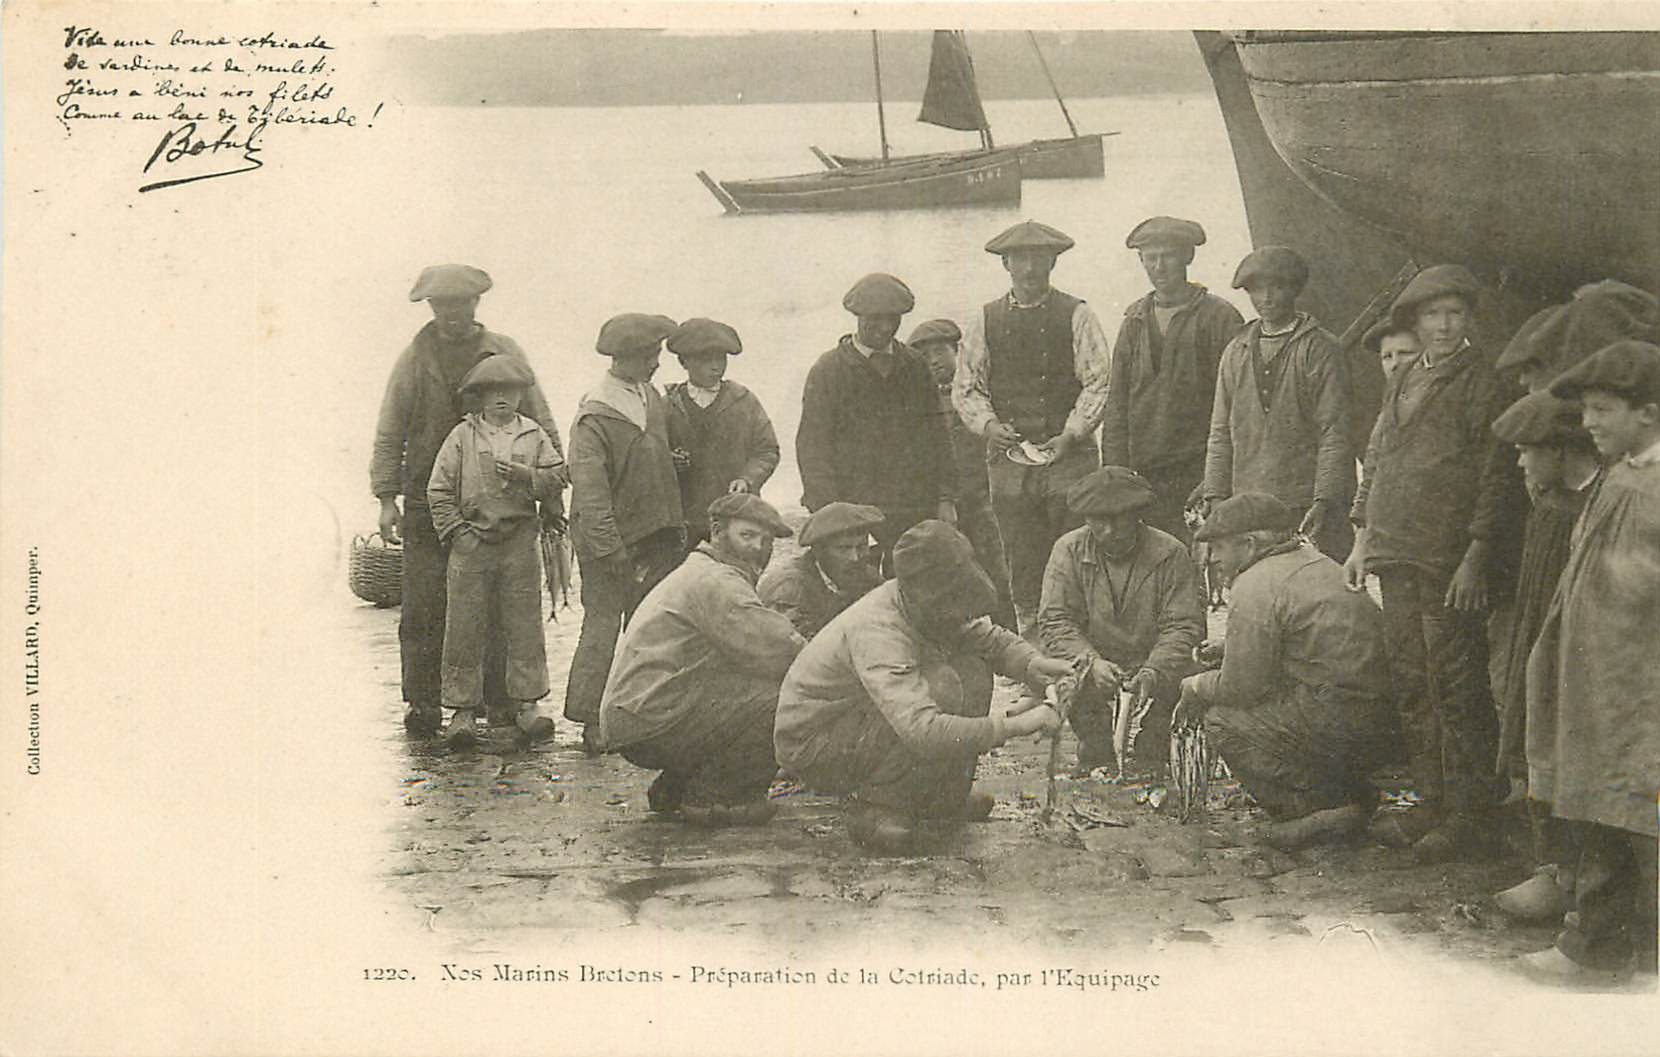 WW 29 Nos Marins Bretons préparation de la Cotriade par l'Equipage vers 1900